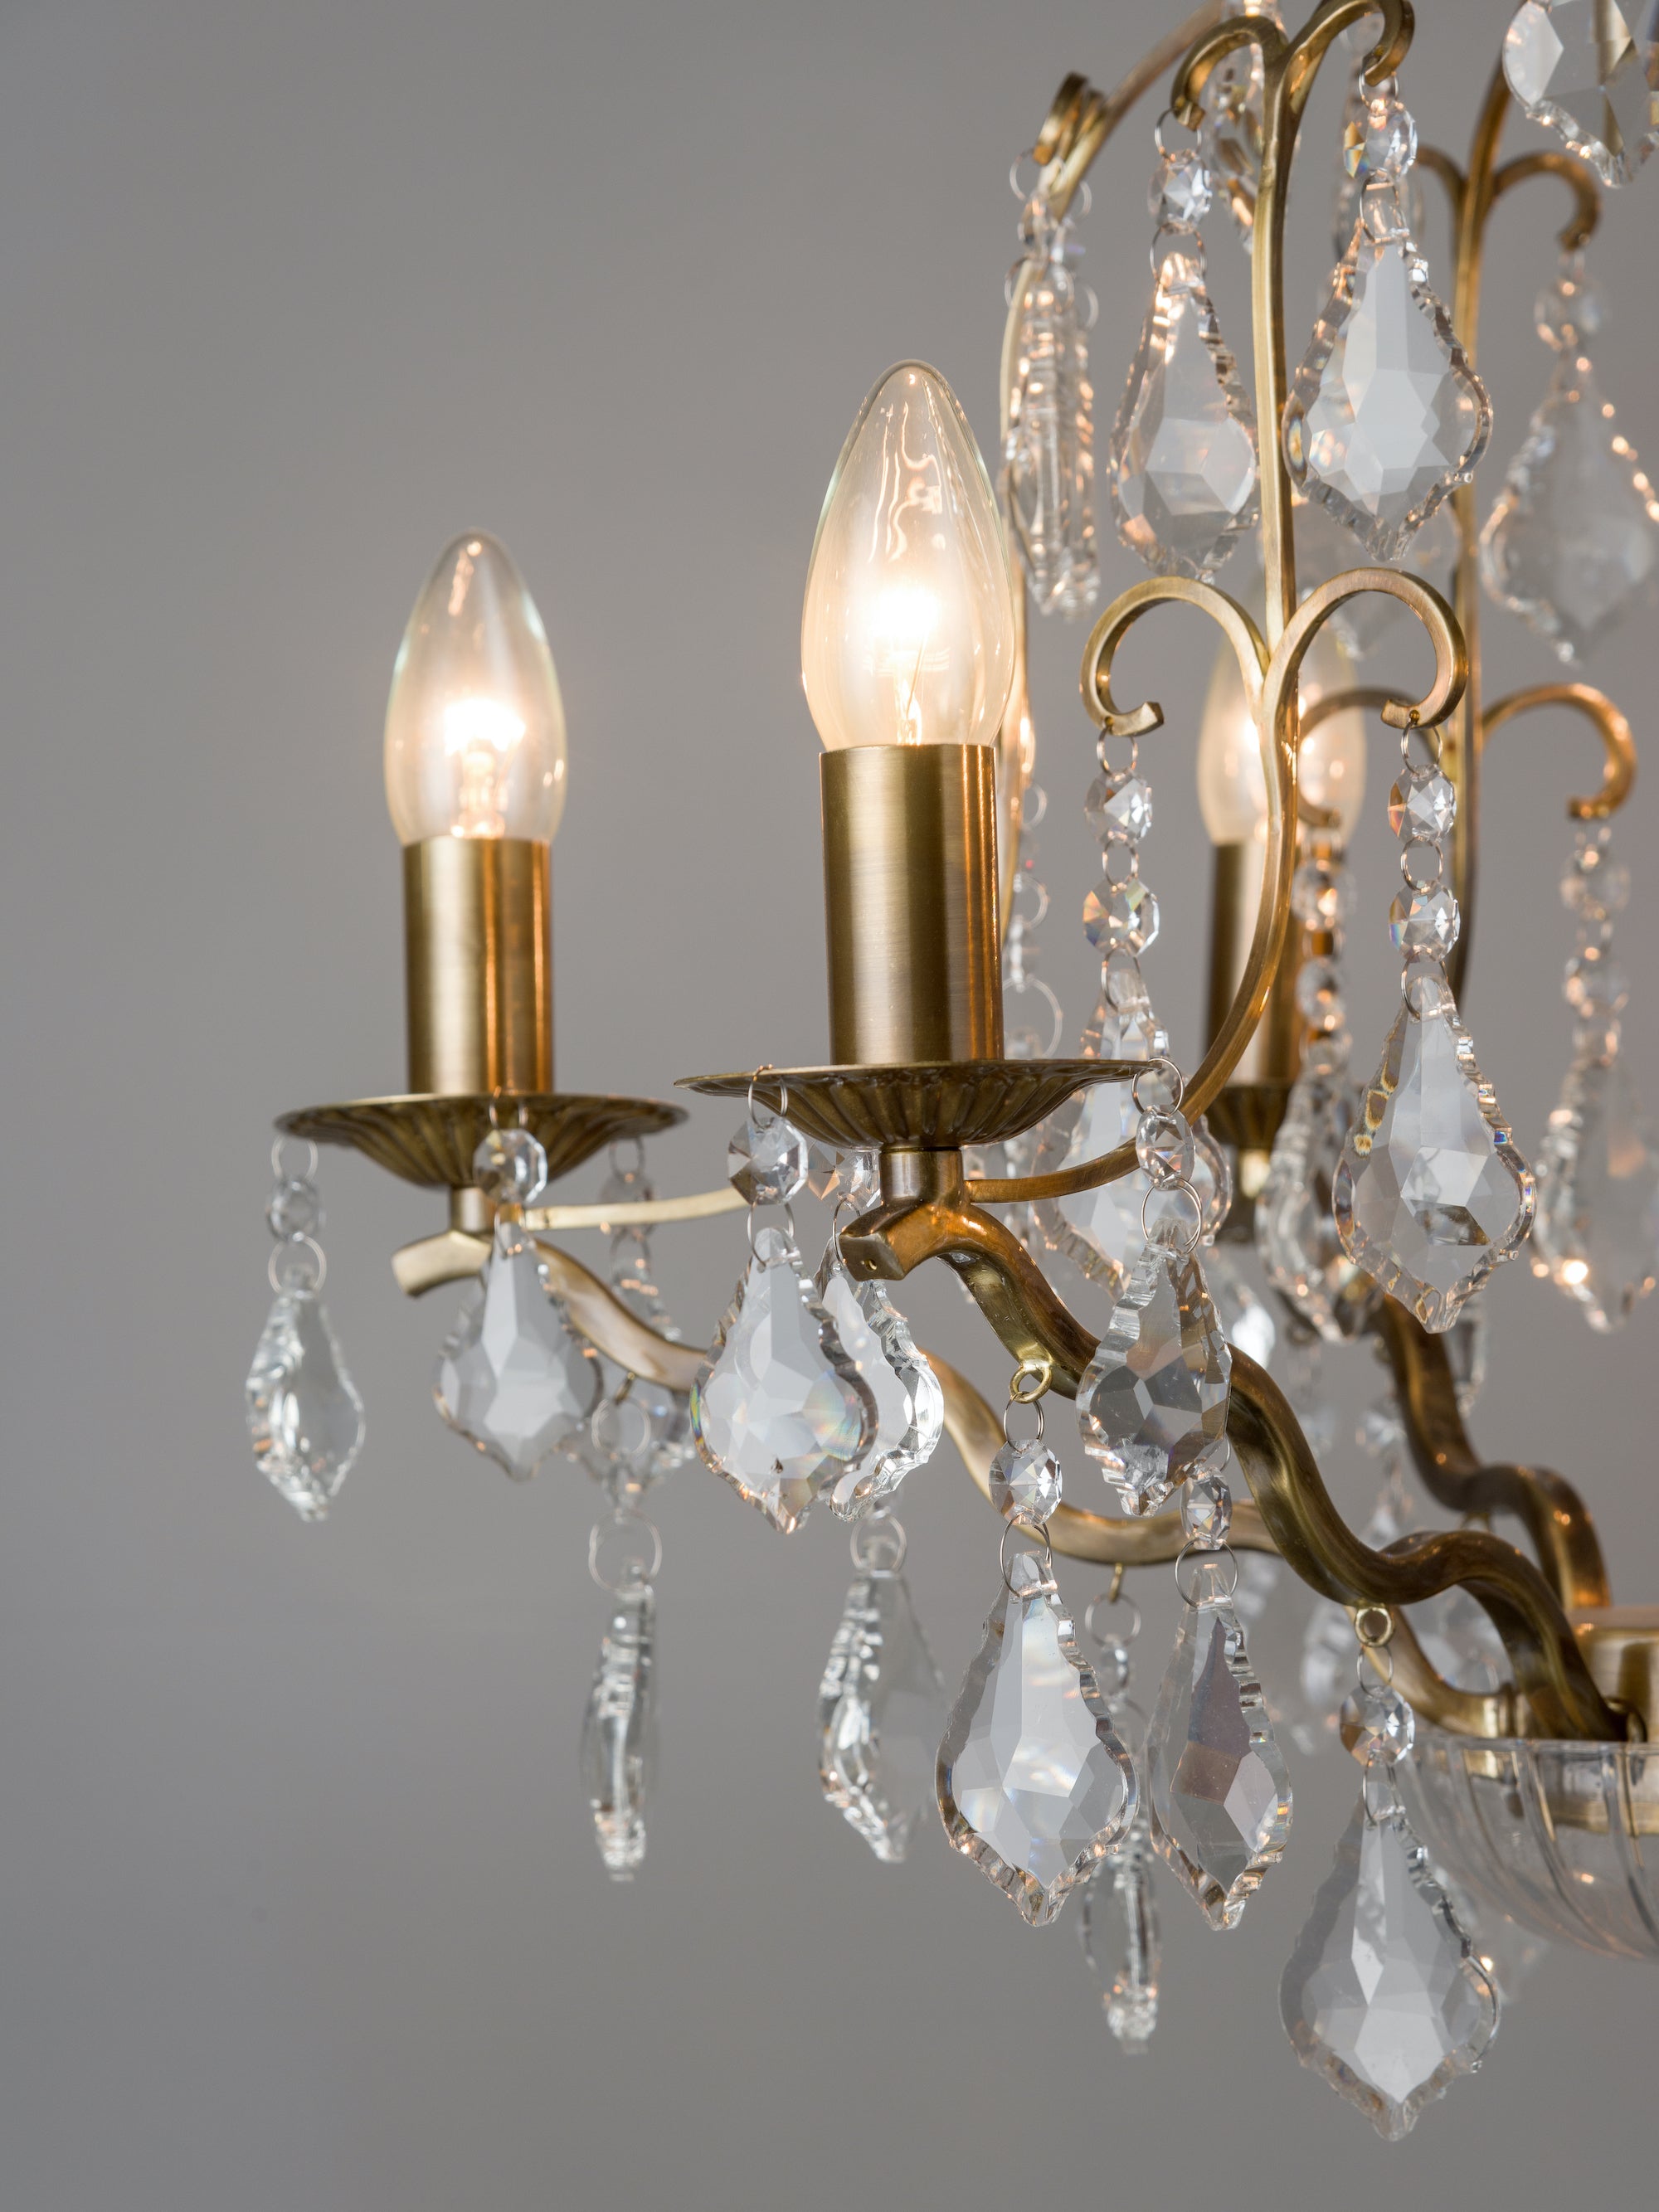 Modena - 6 light aged brass crystal glass chandelier | Ceiling Light | Lights & Lamps Inc | USA